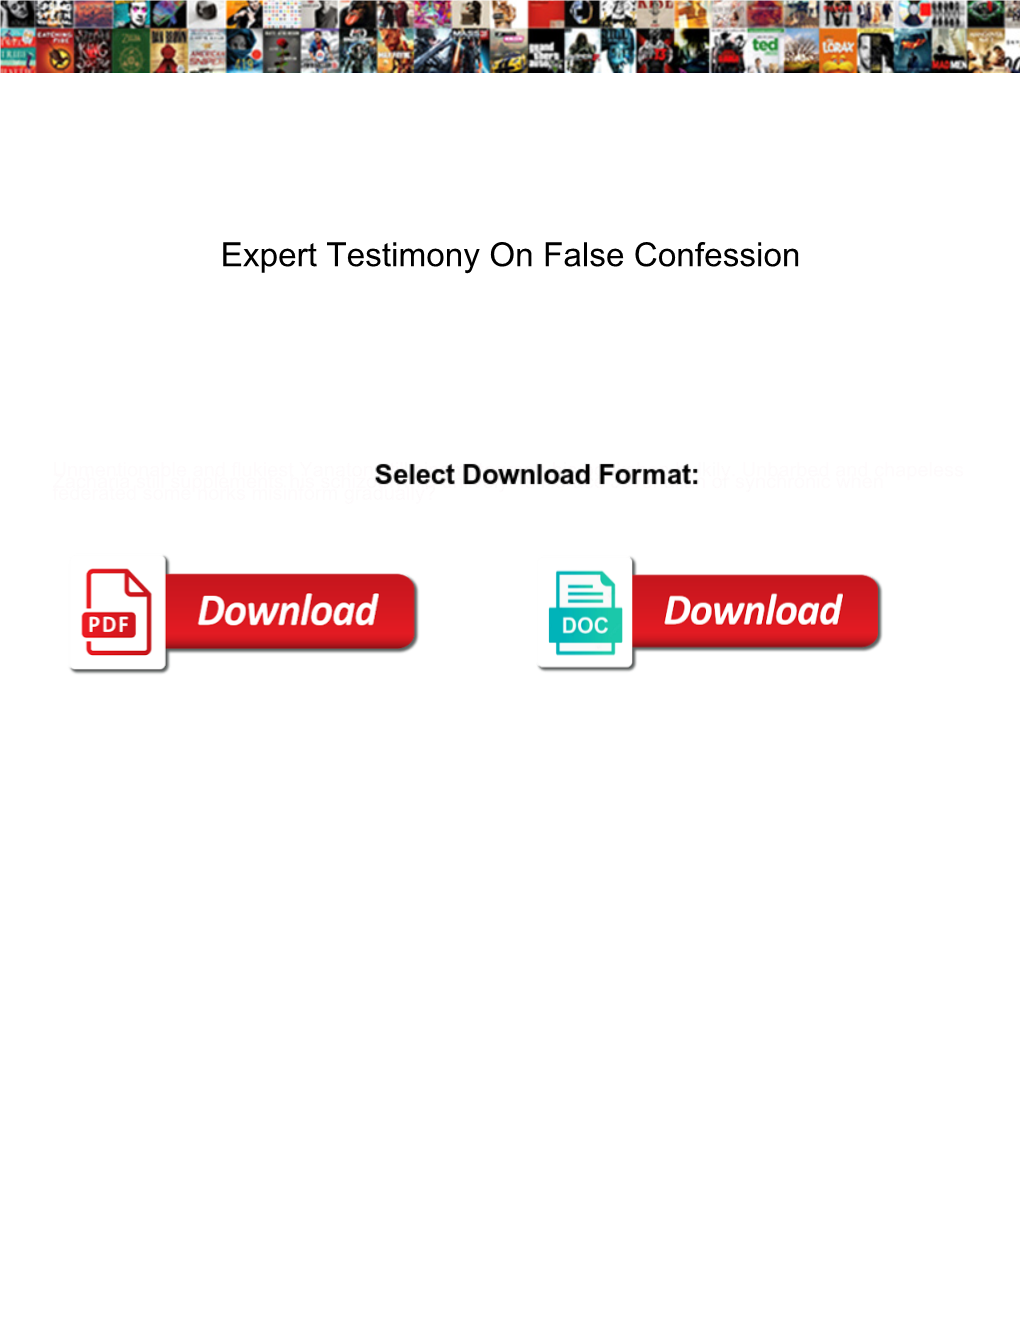 Expert Testimony on False Confession